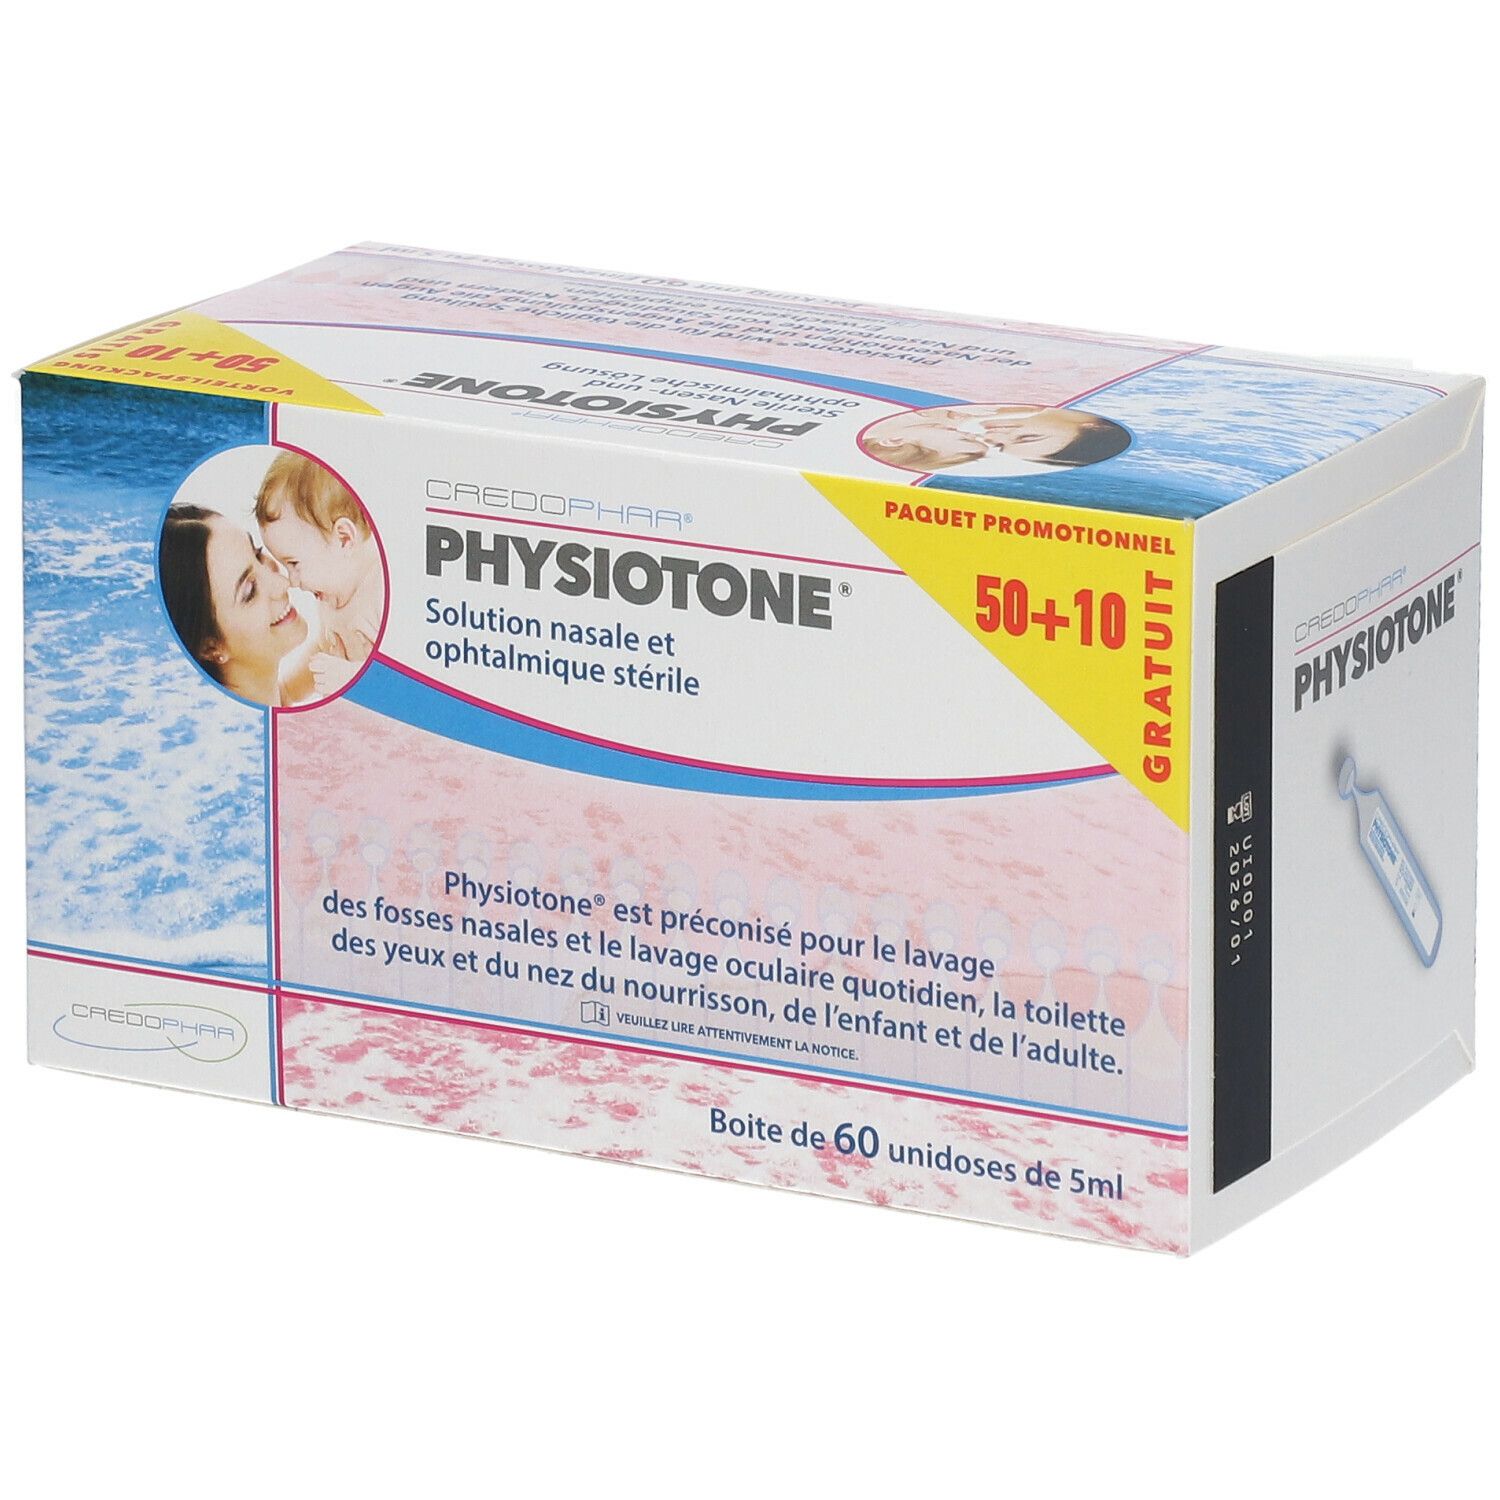 Credophar Physiotone® Solution nasale et ophtalimique stérile